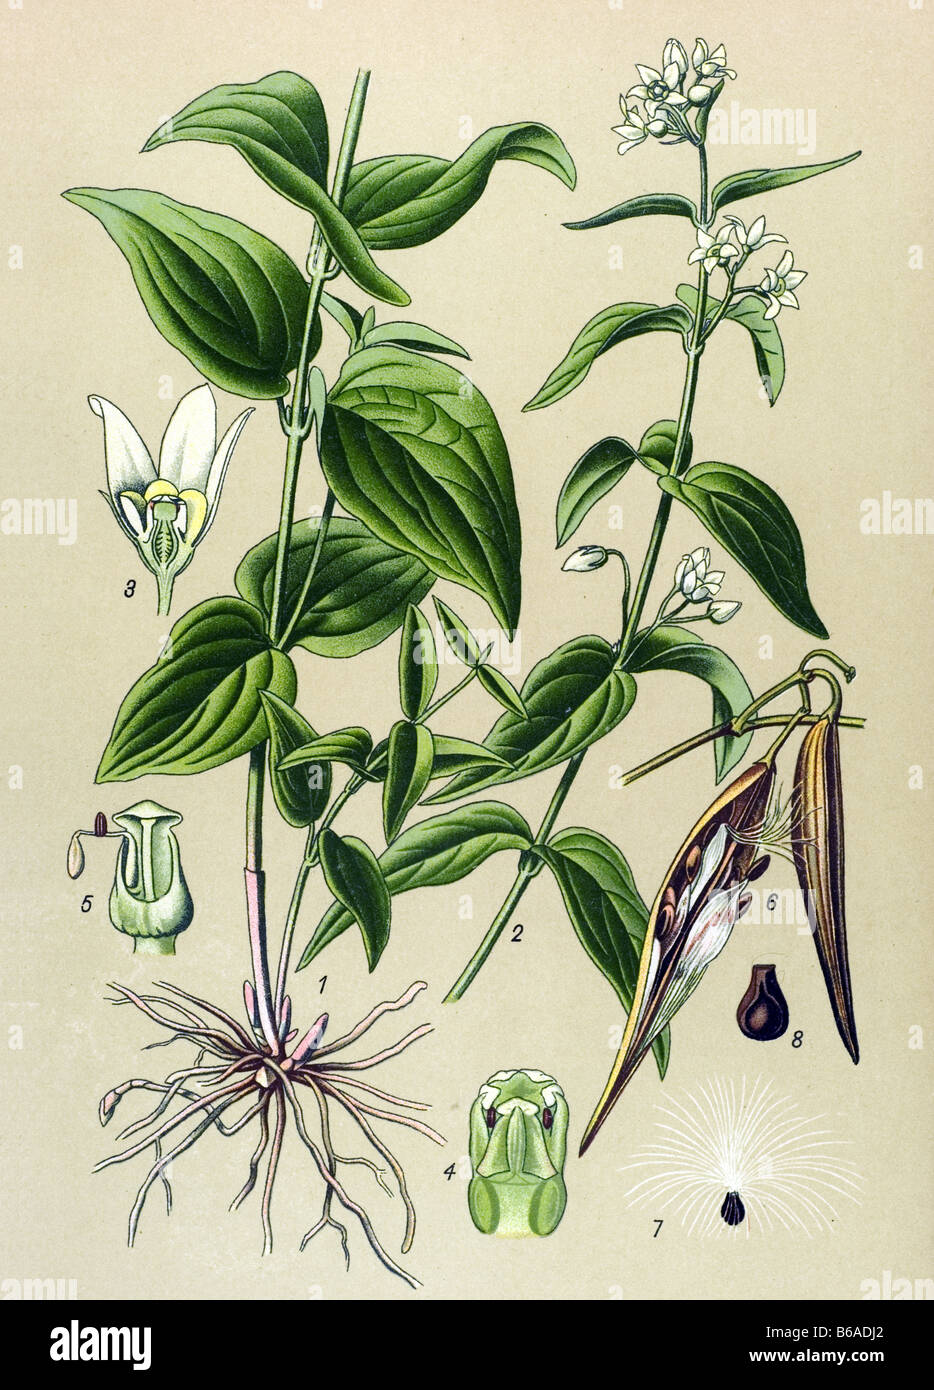 Vincetoxicum hirundinaria poisonous plants illustrations Stock Photo